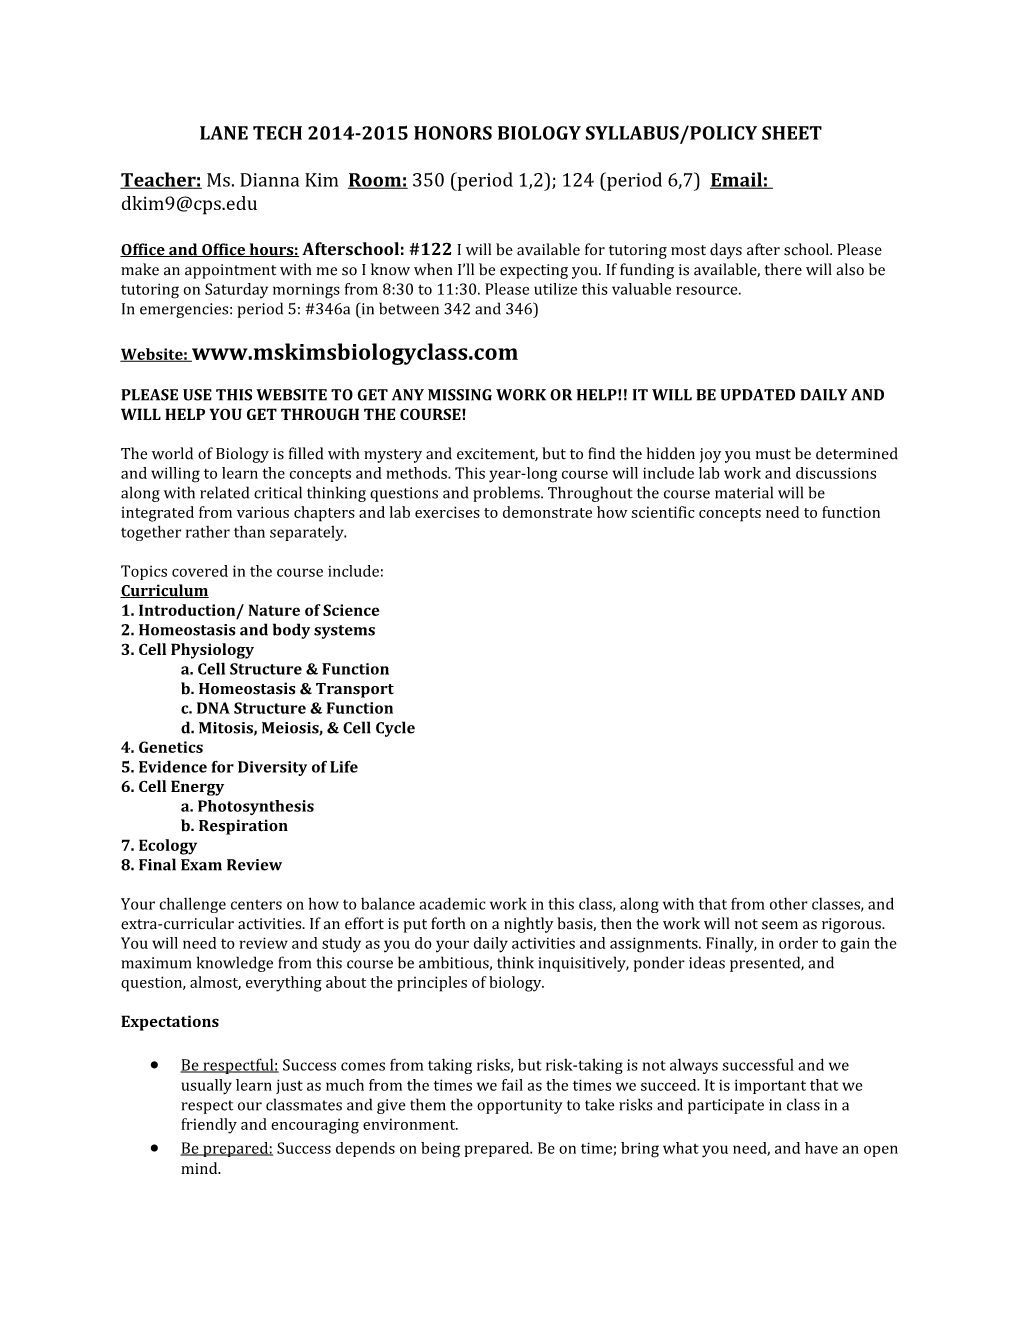 Lane Tech 2014-2015 Honors Biology Syllabus/Policy Sheet